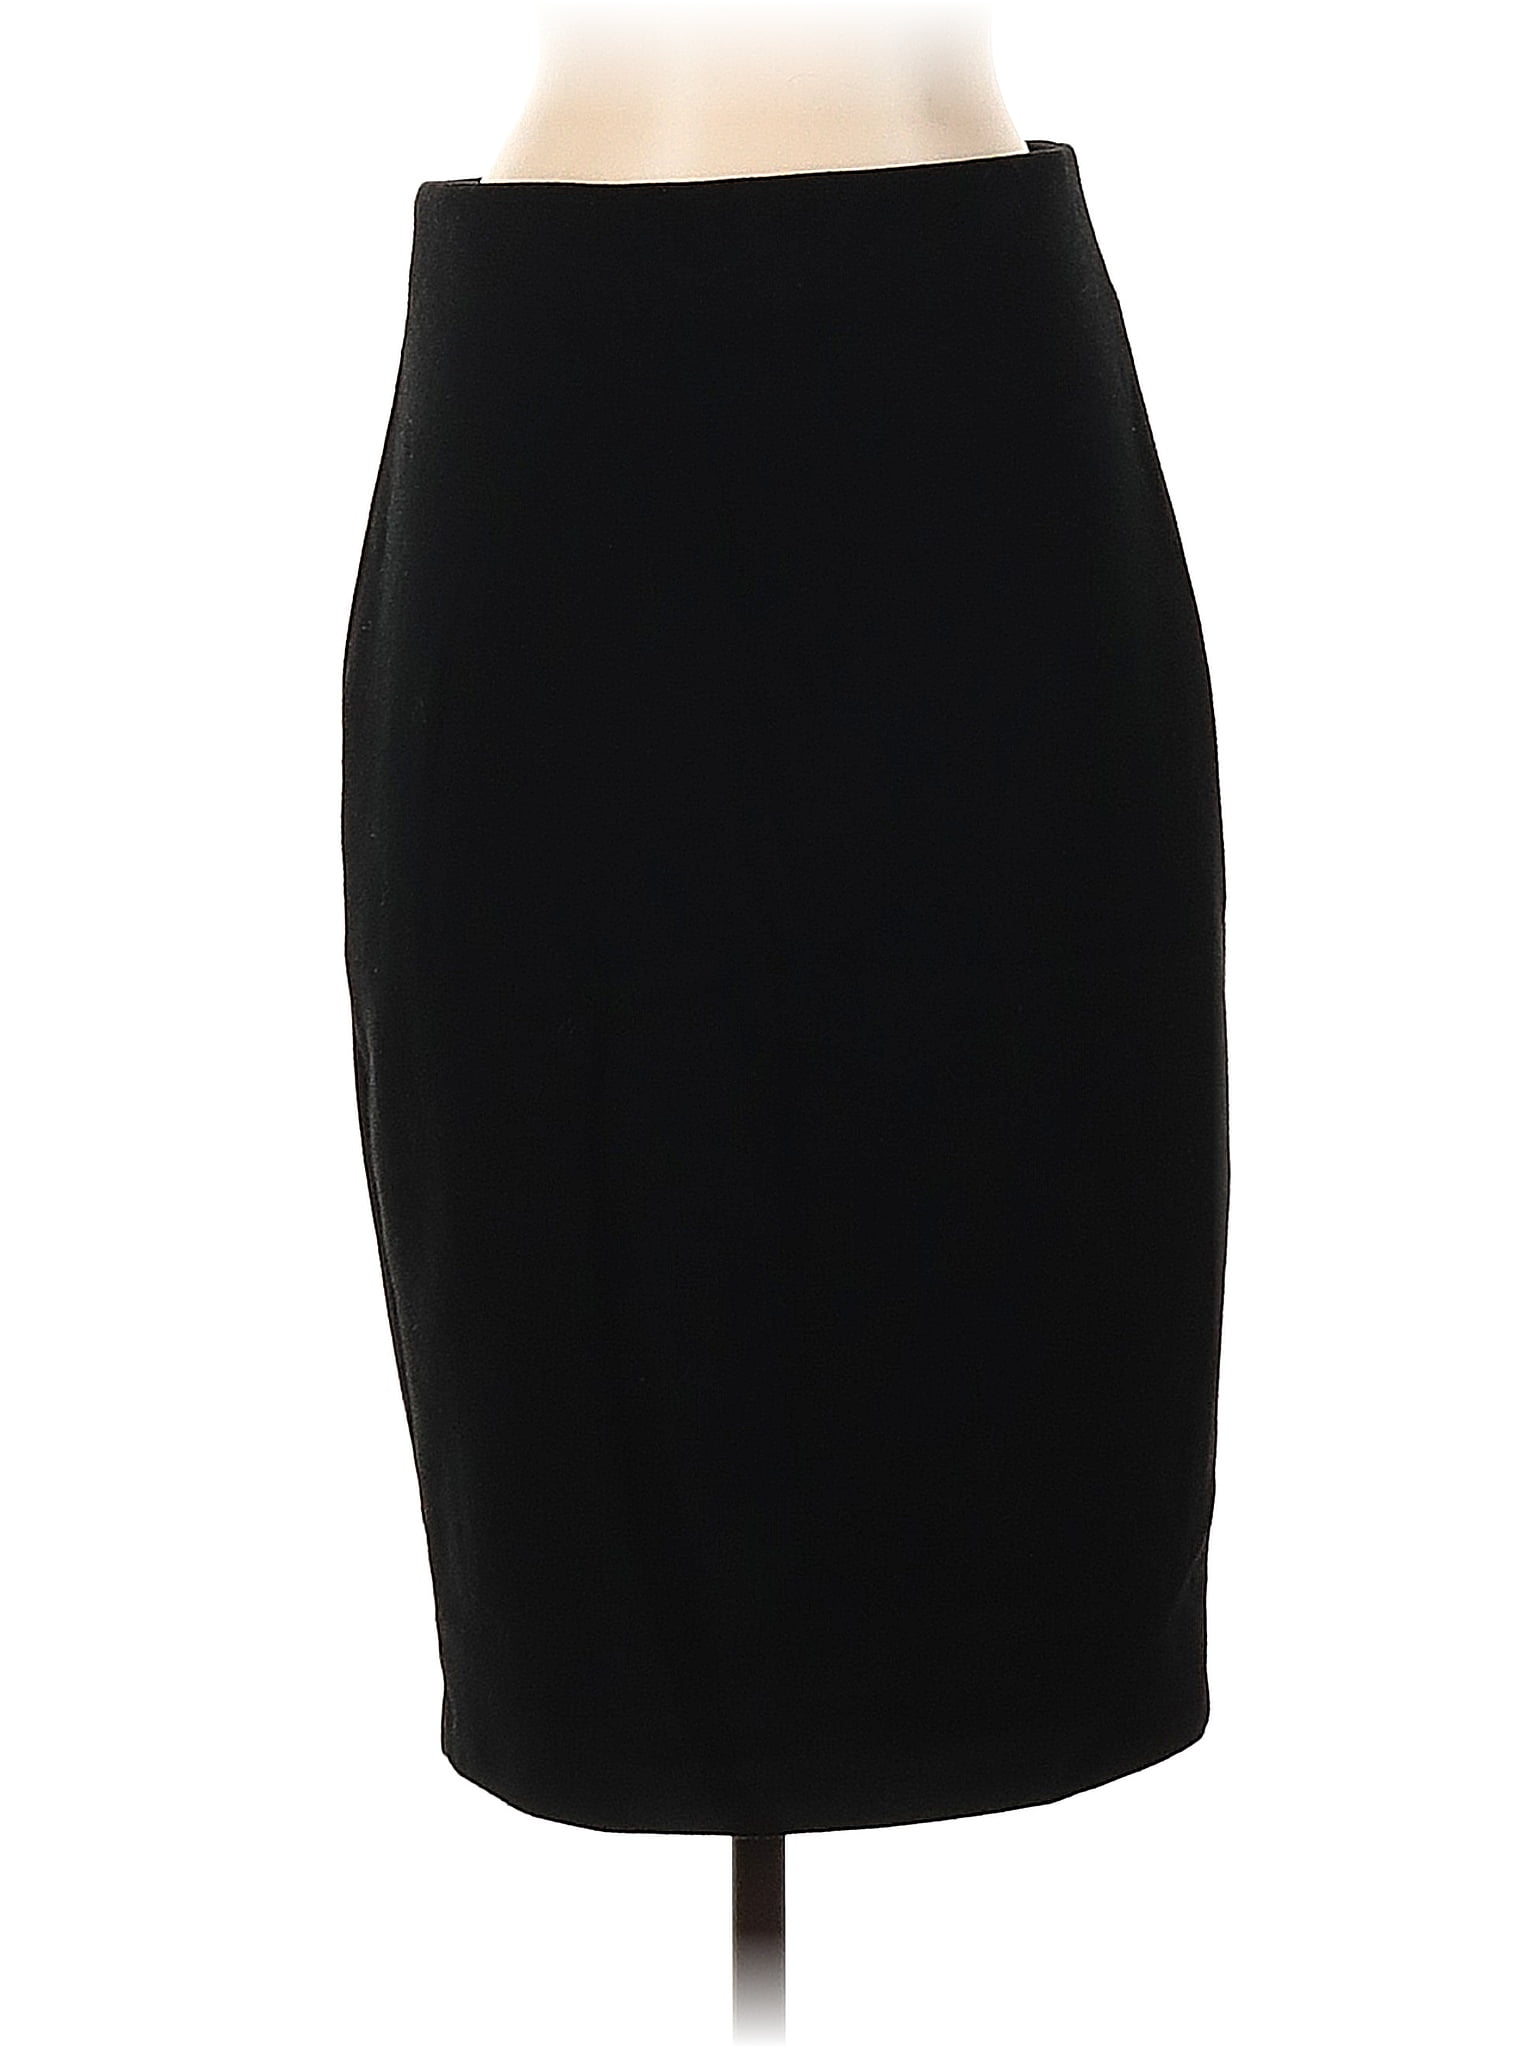 Philosophy Republic Clothing Black Casual Skirt Size 2 - 75% off | thredUP